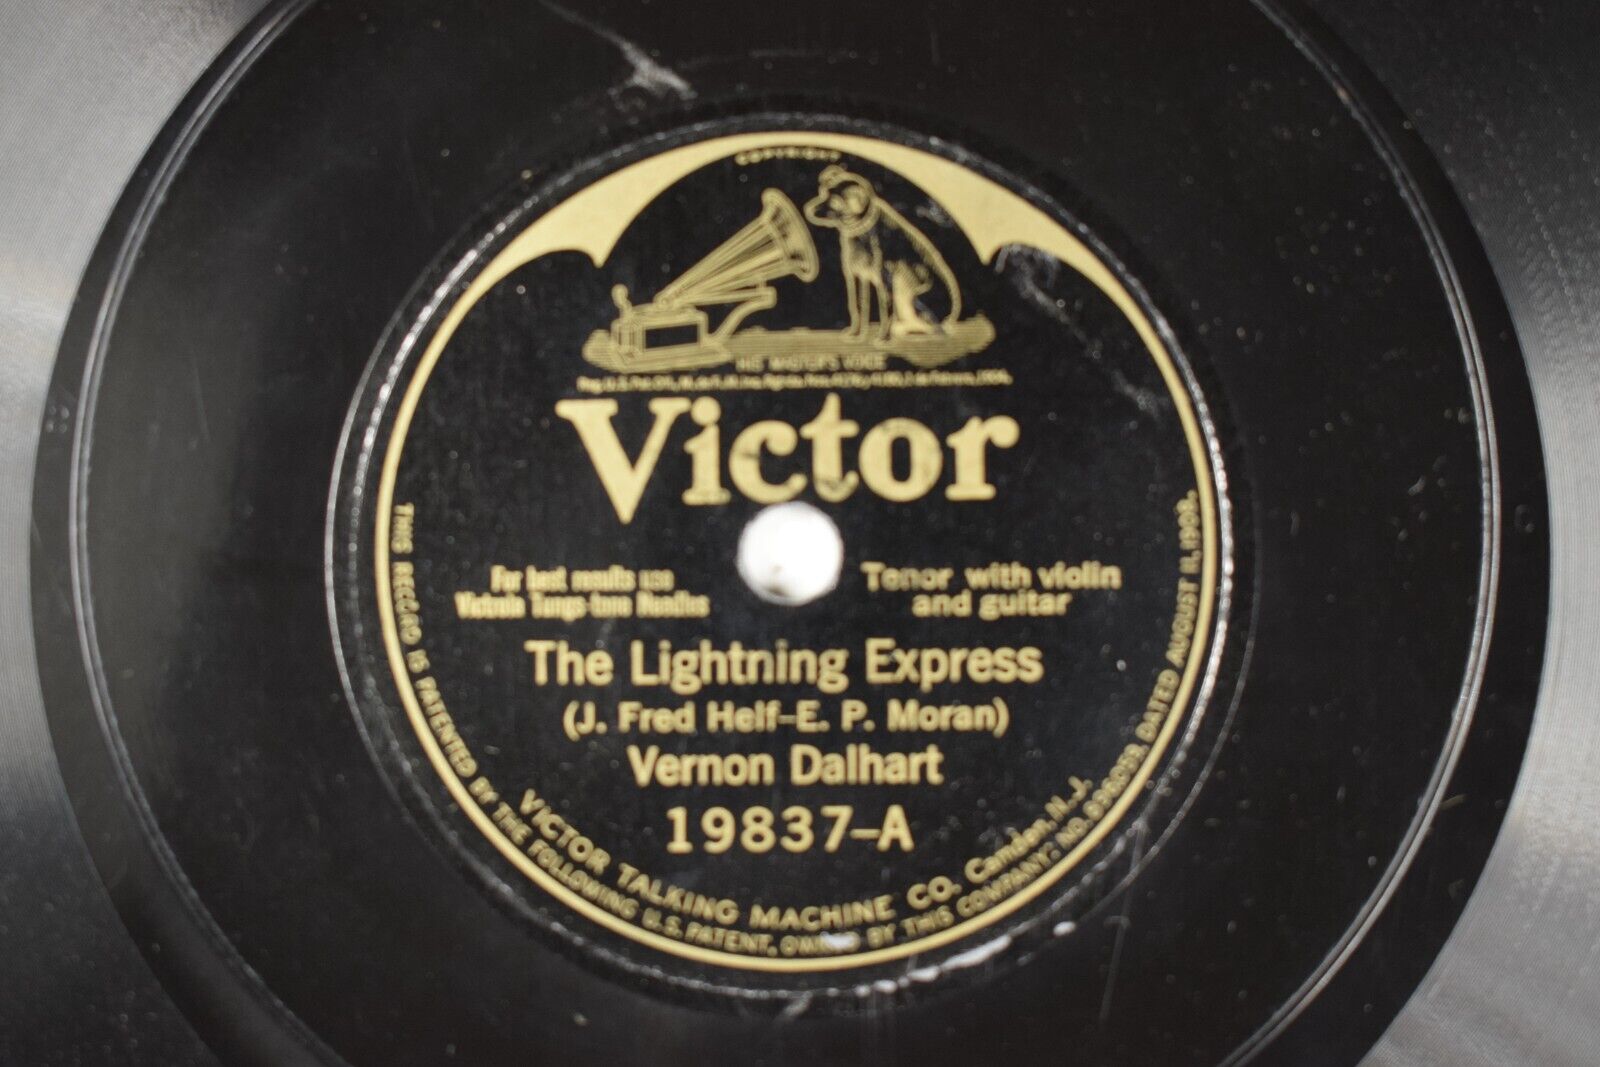 Vernon Dalhart 78 RPM Victor - The Lightning Express L8E